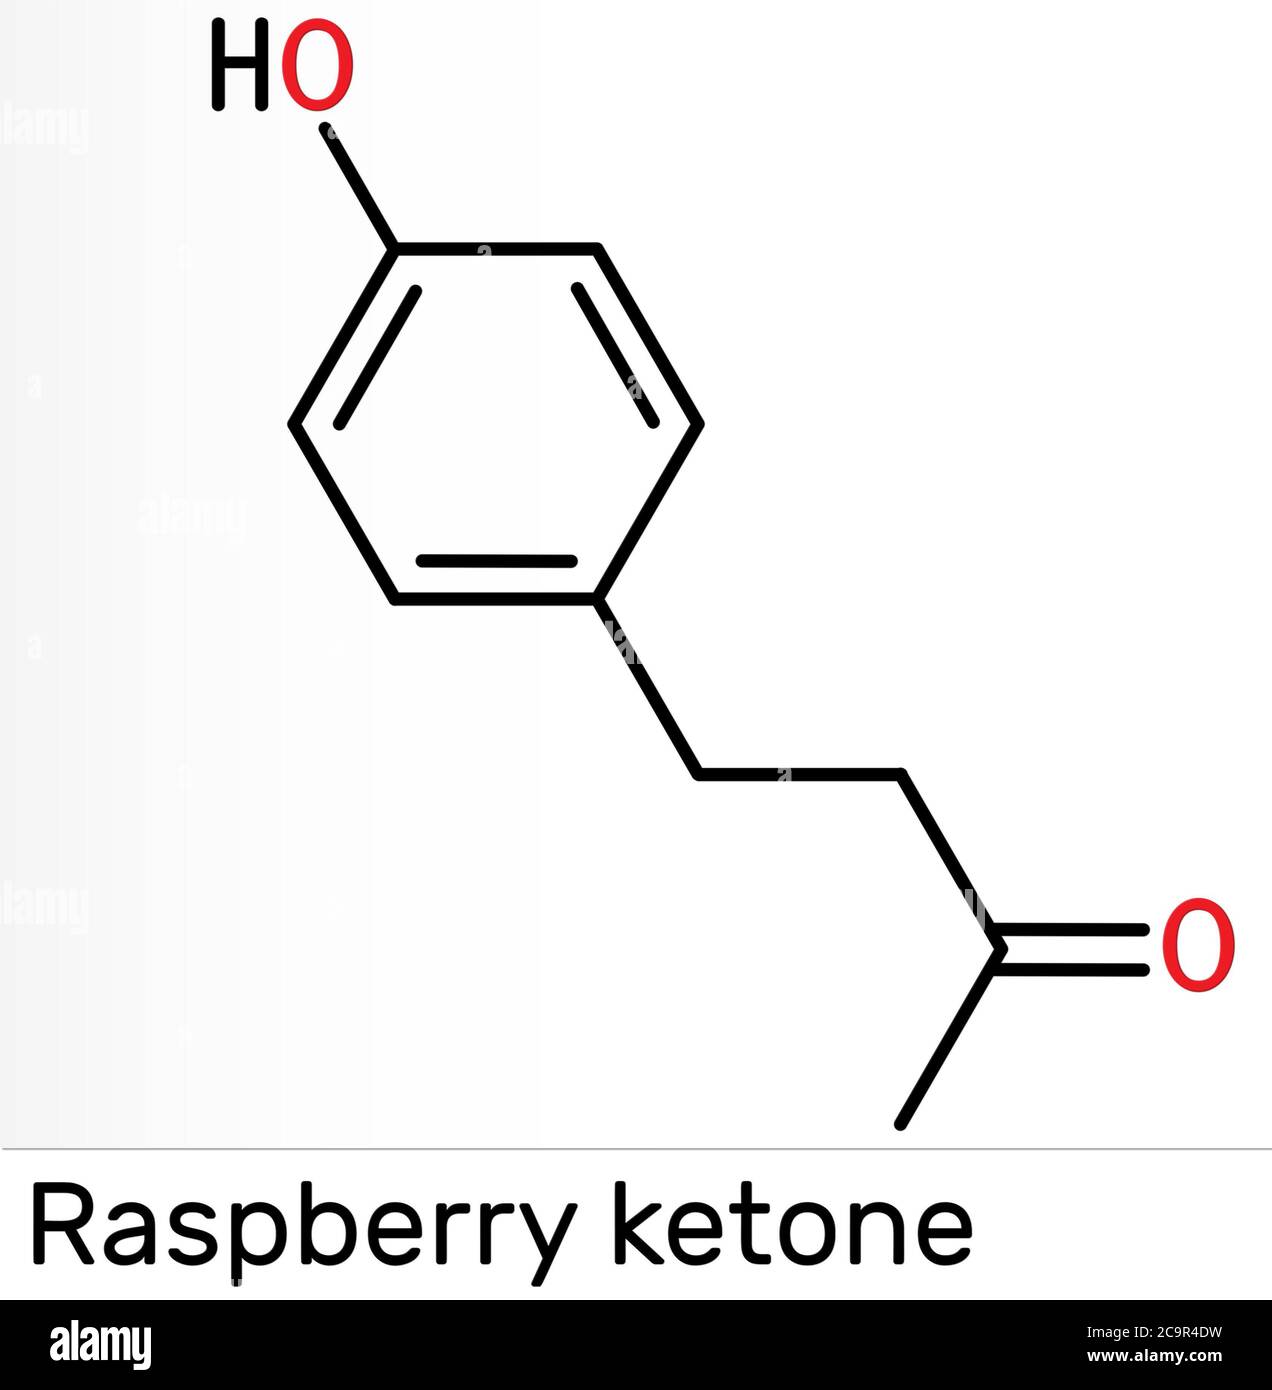 ketone structure